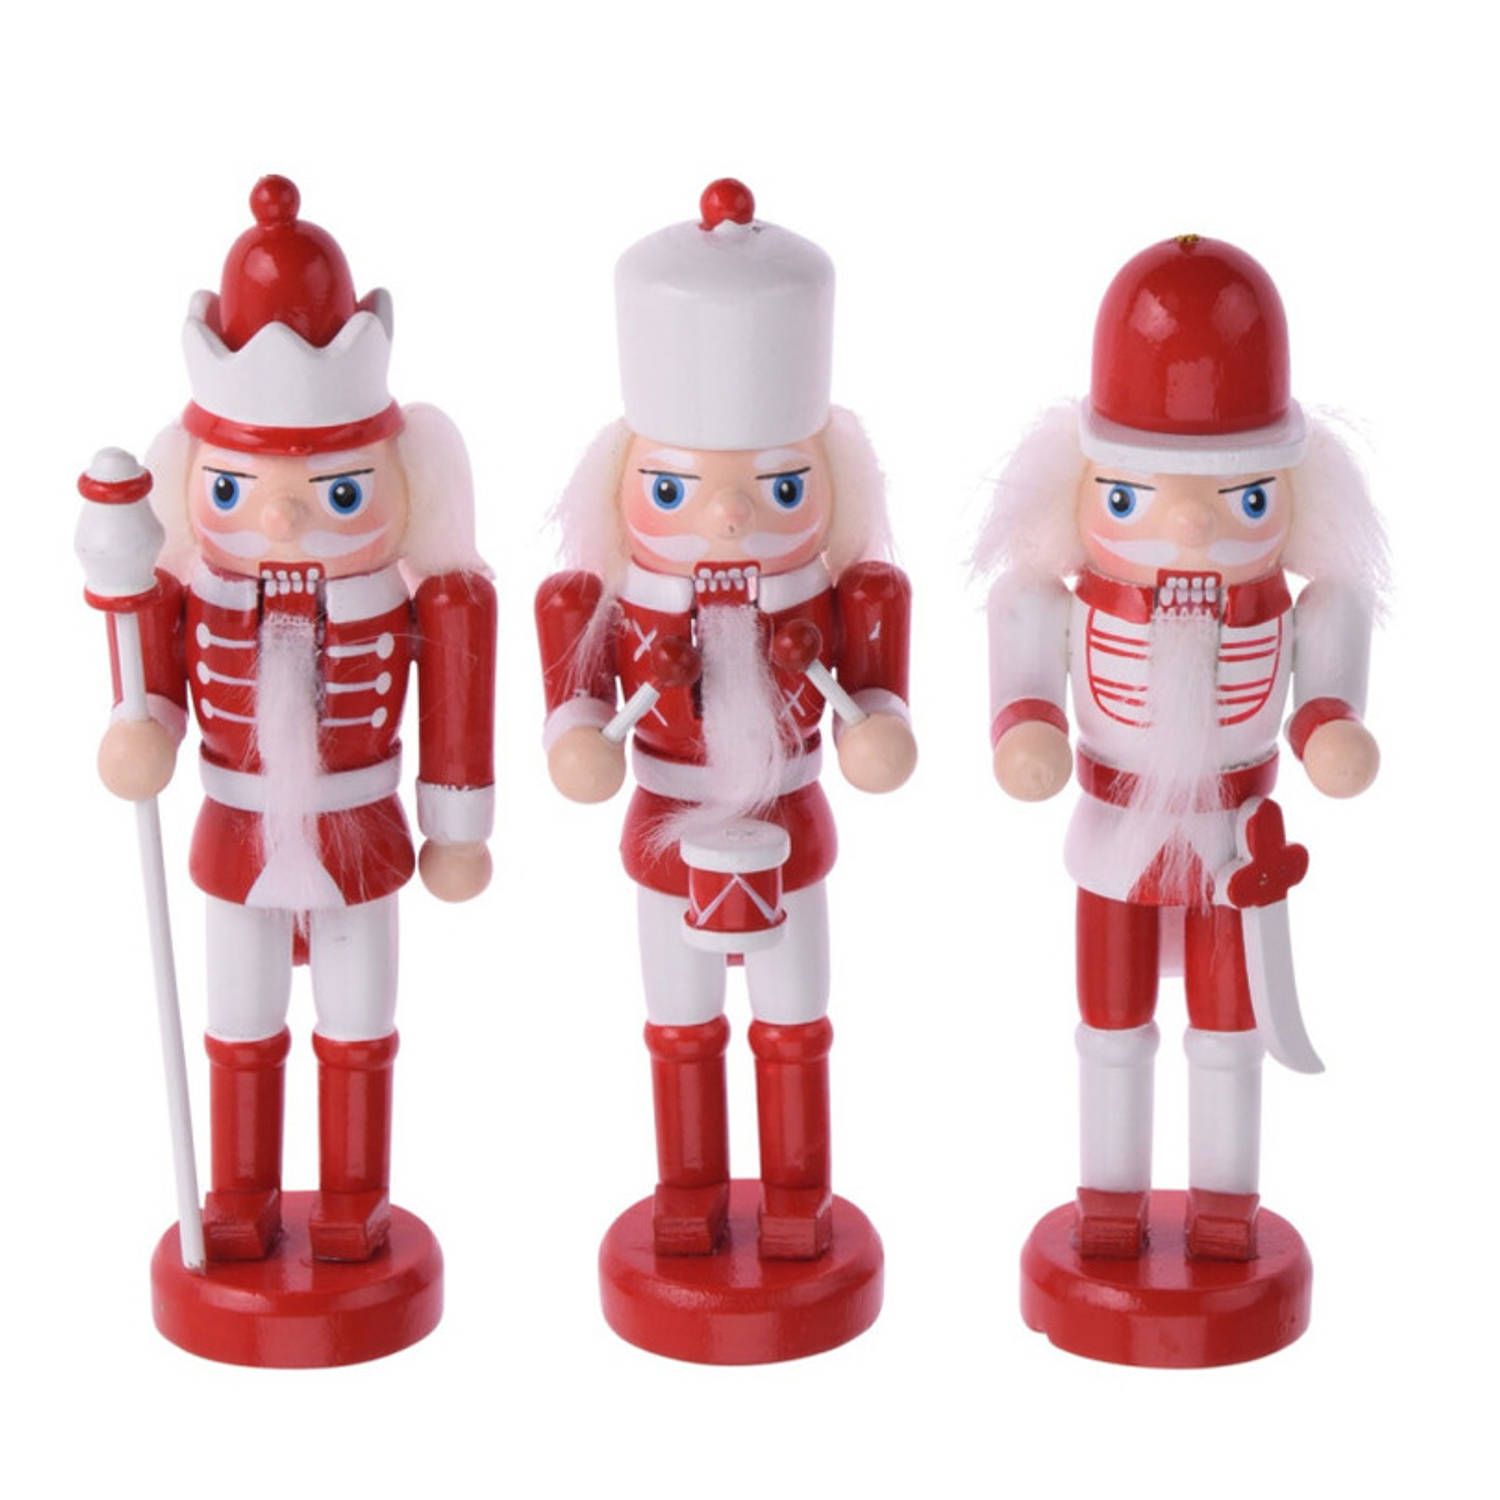 3x stuks kersthangers notenkrakers poppetjes/soldaten rood/wit 12,5 cm - Kersthangers